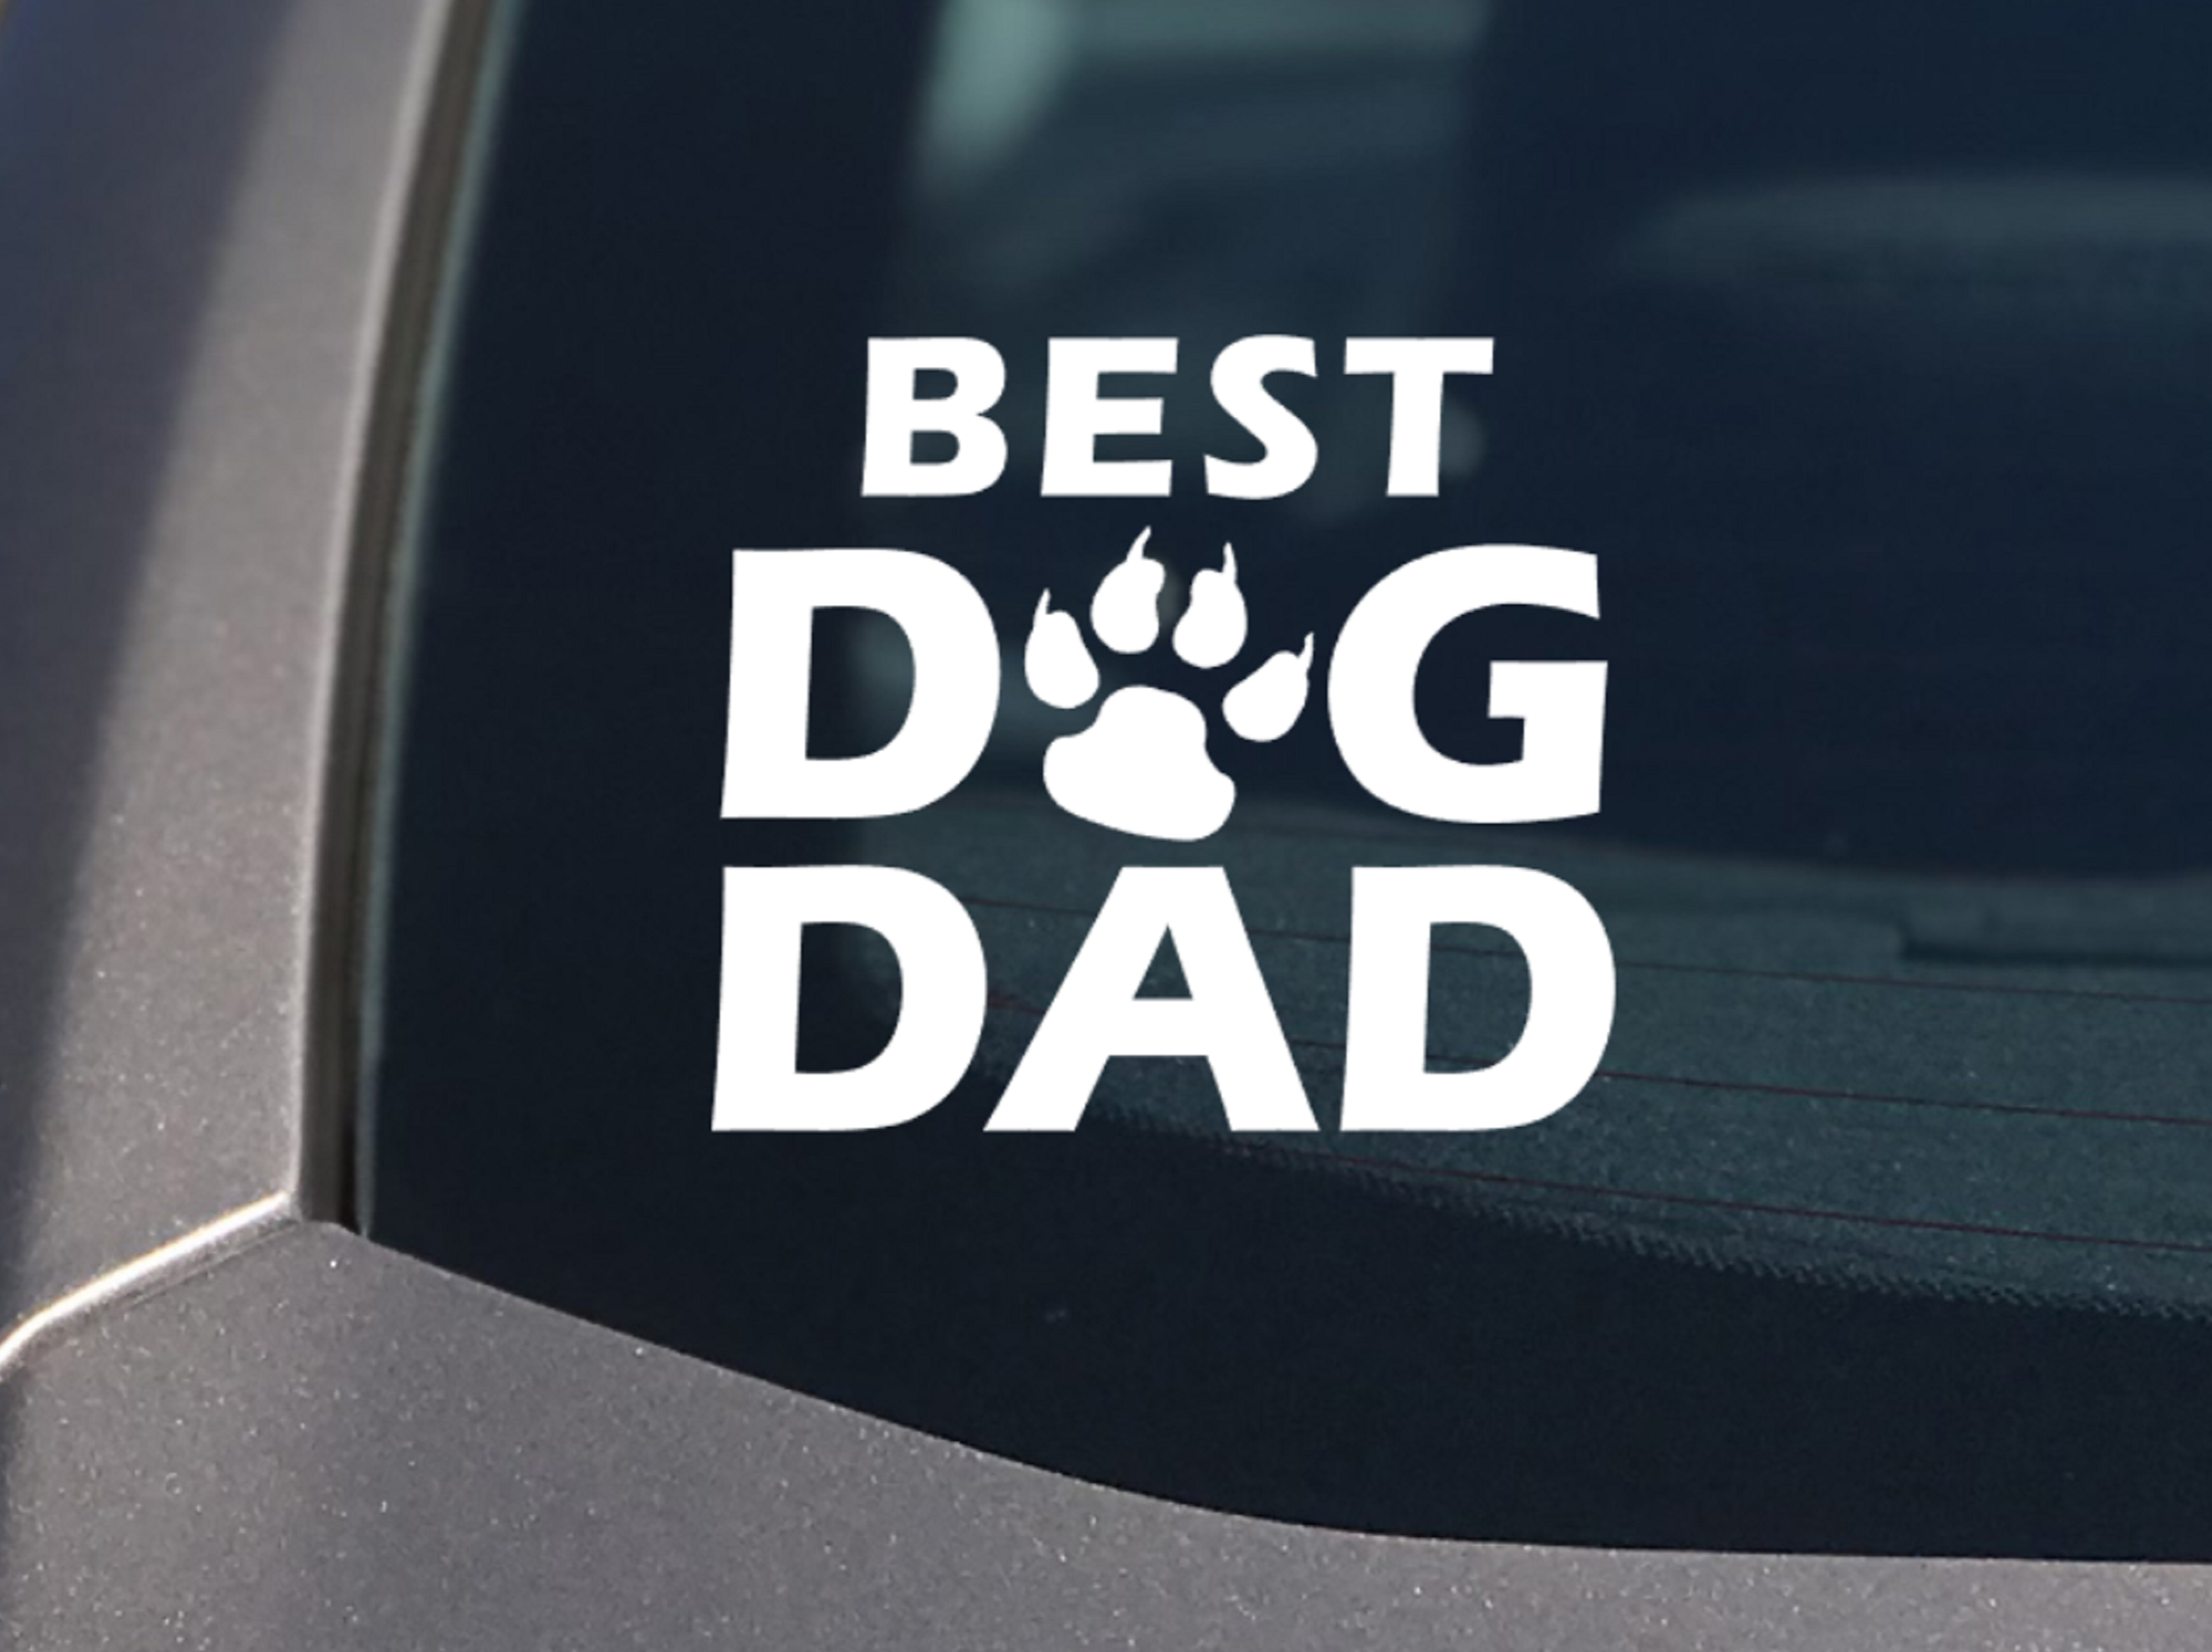 Best Dad Dog Ever Sticker - My Crafty Dog